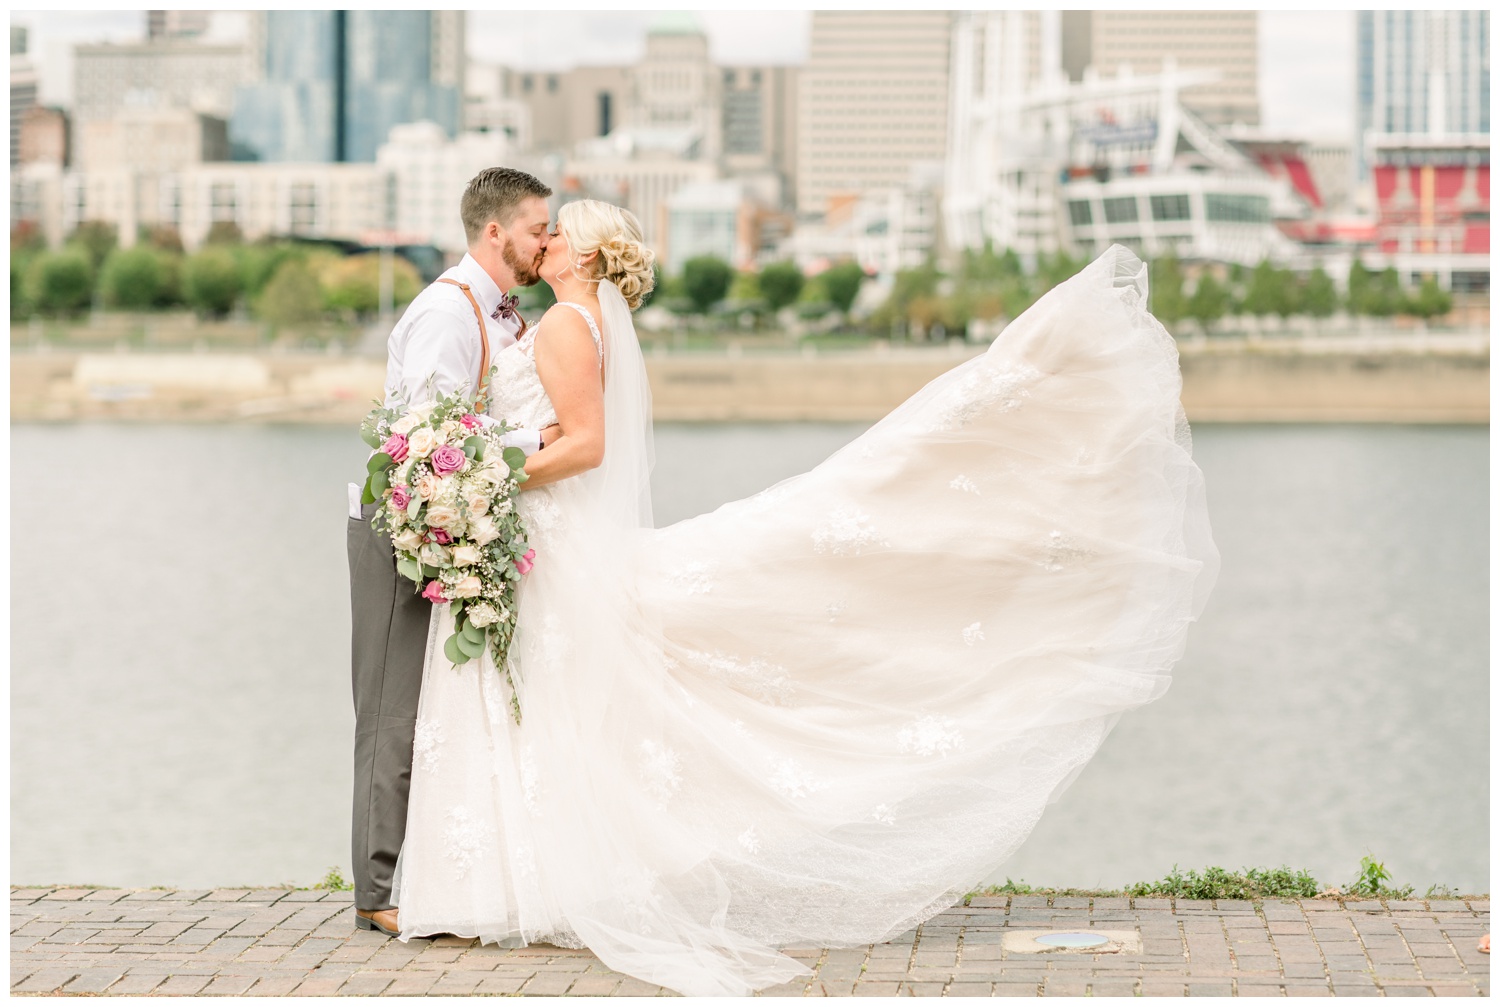 Bride and Groom with Wedding Dress Blowing in Wind with Cincinnati Skyline in Background